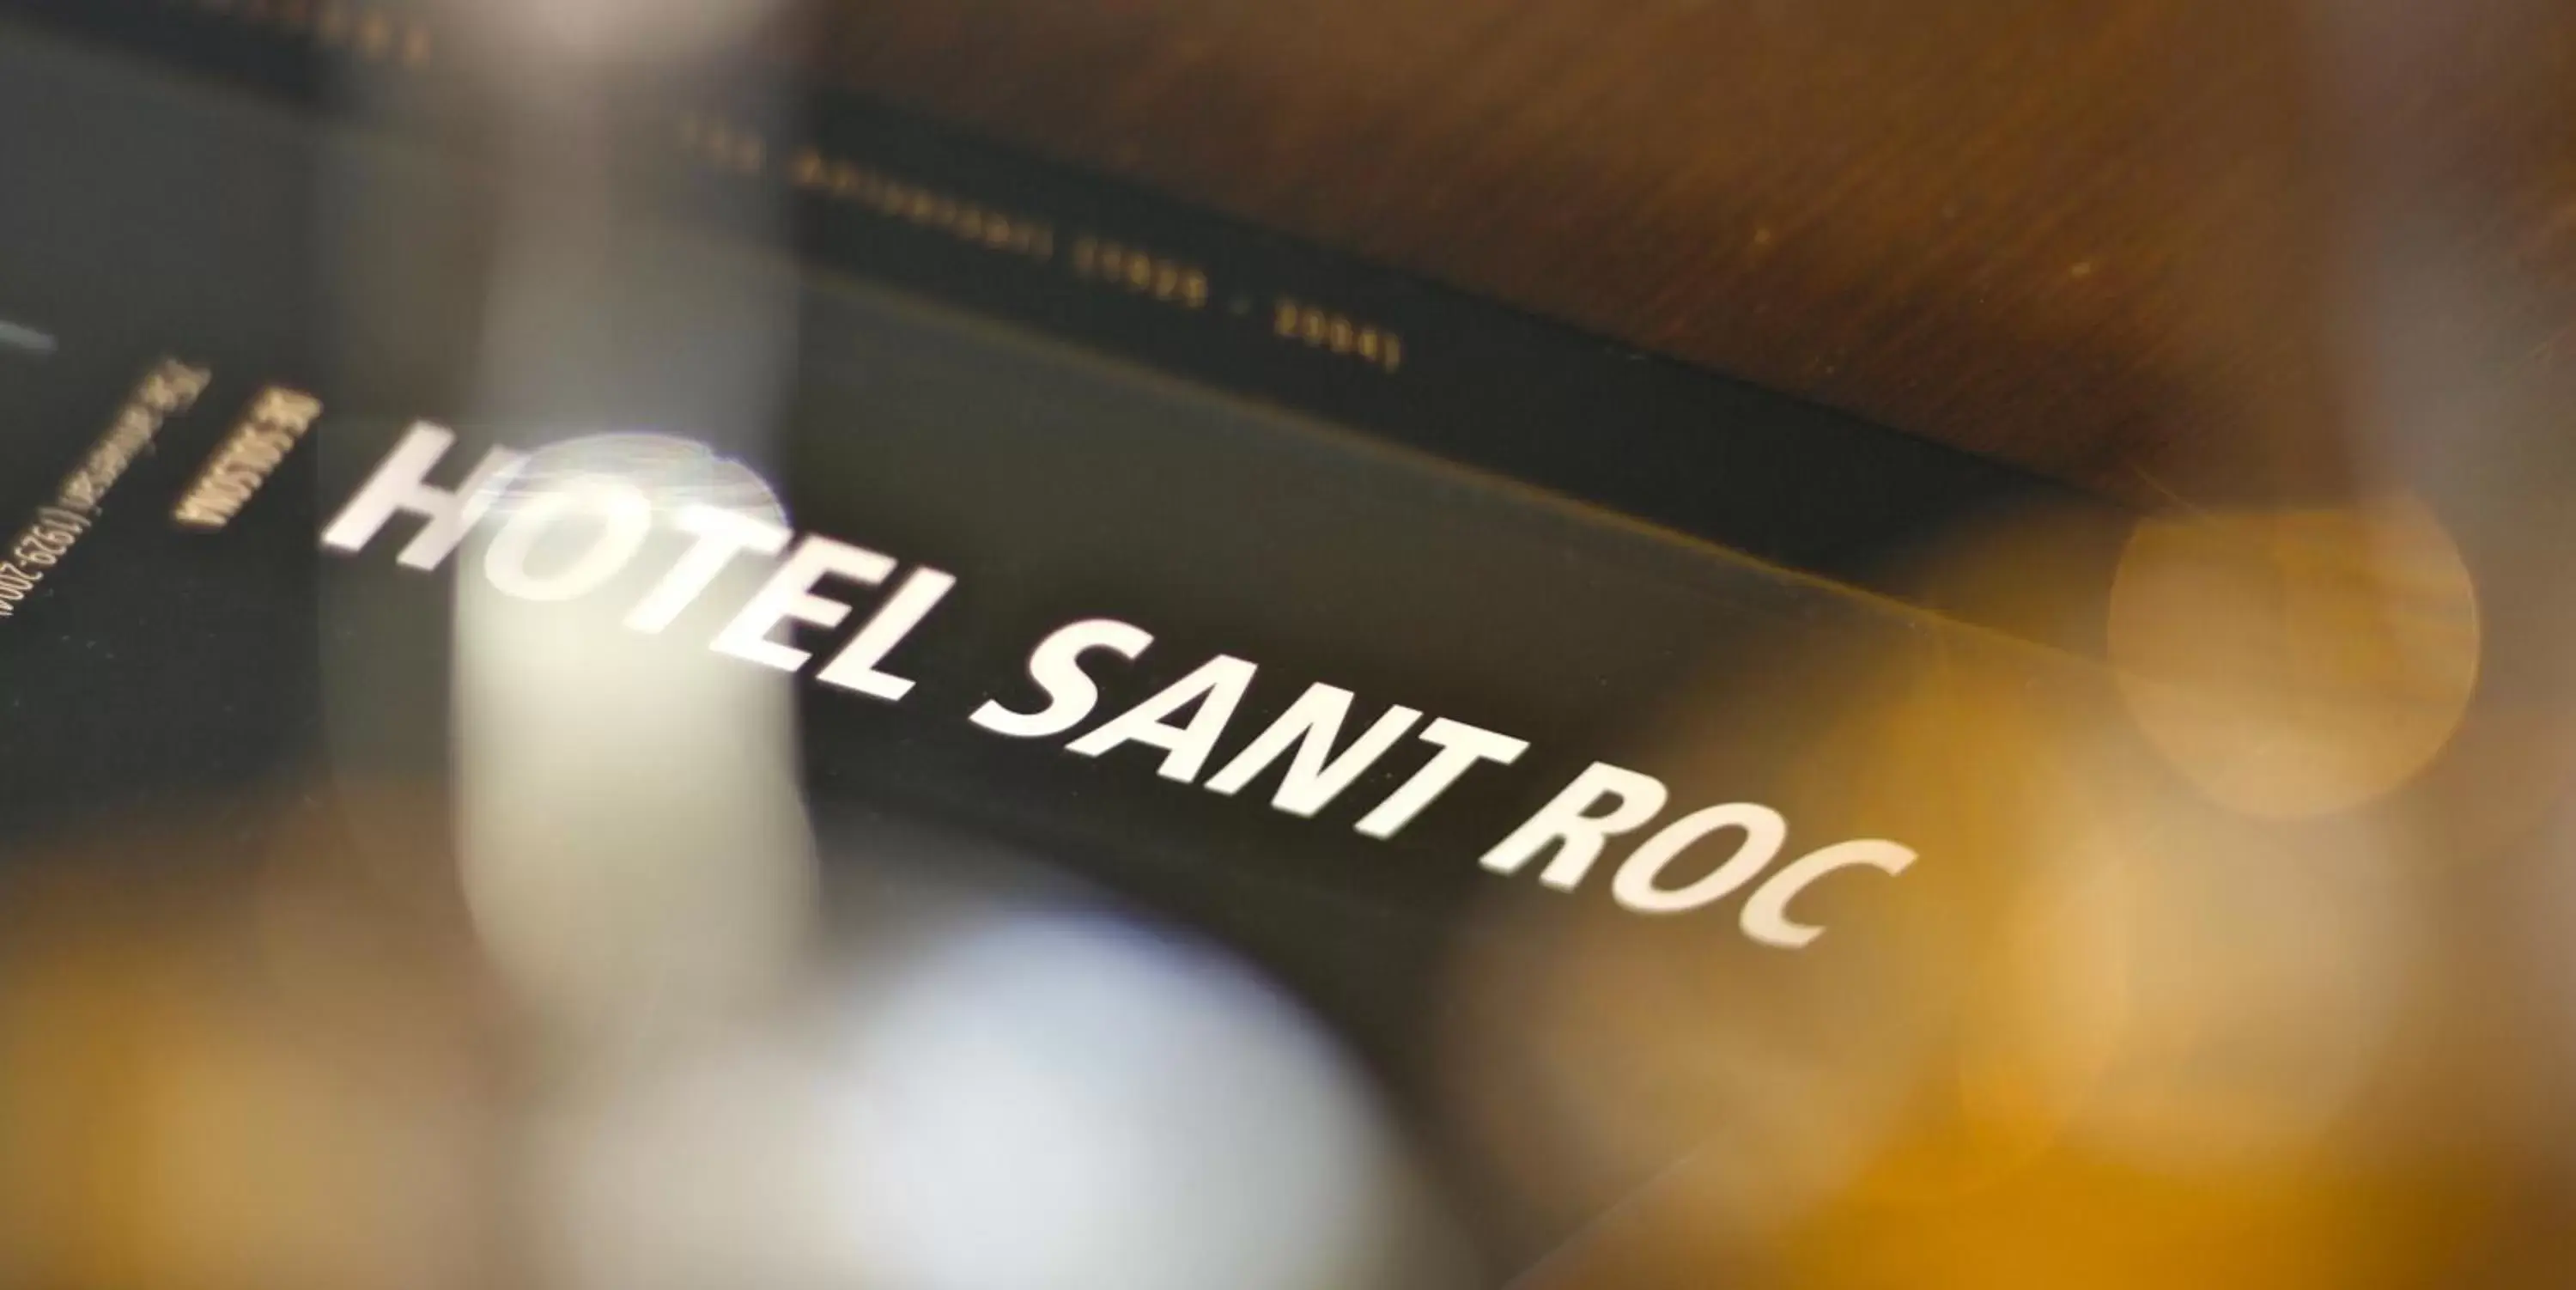 Decorative detail in Hotel Sant Roc